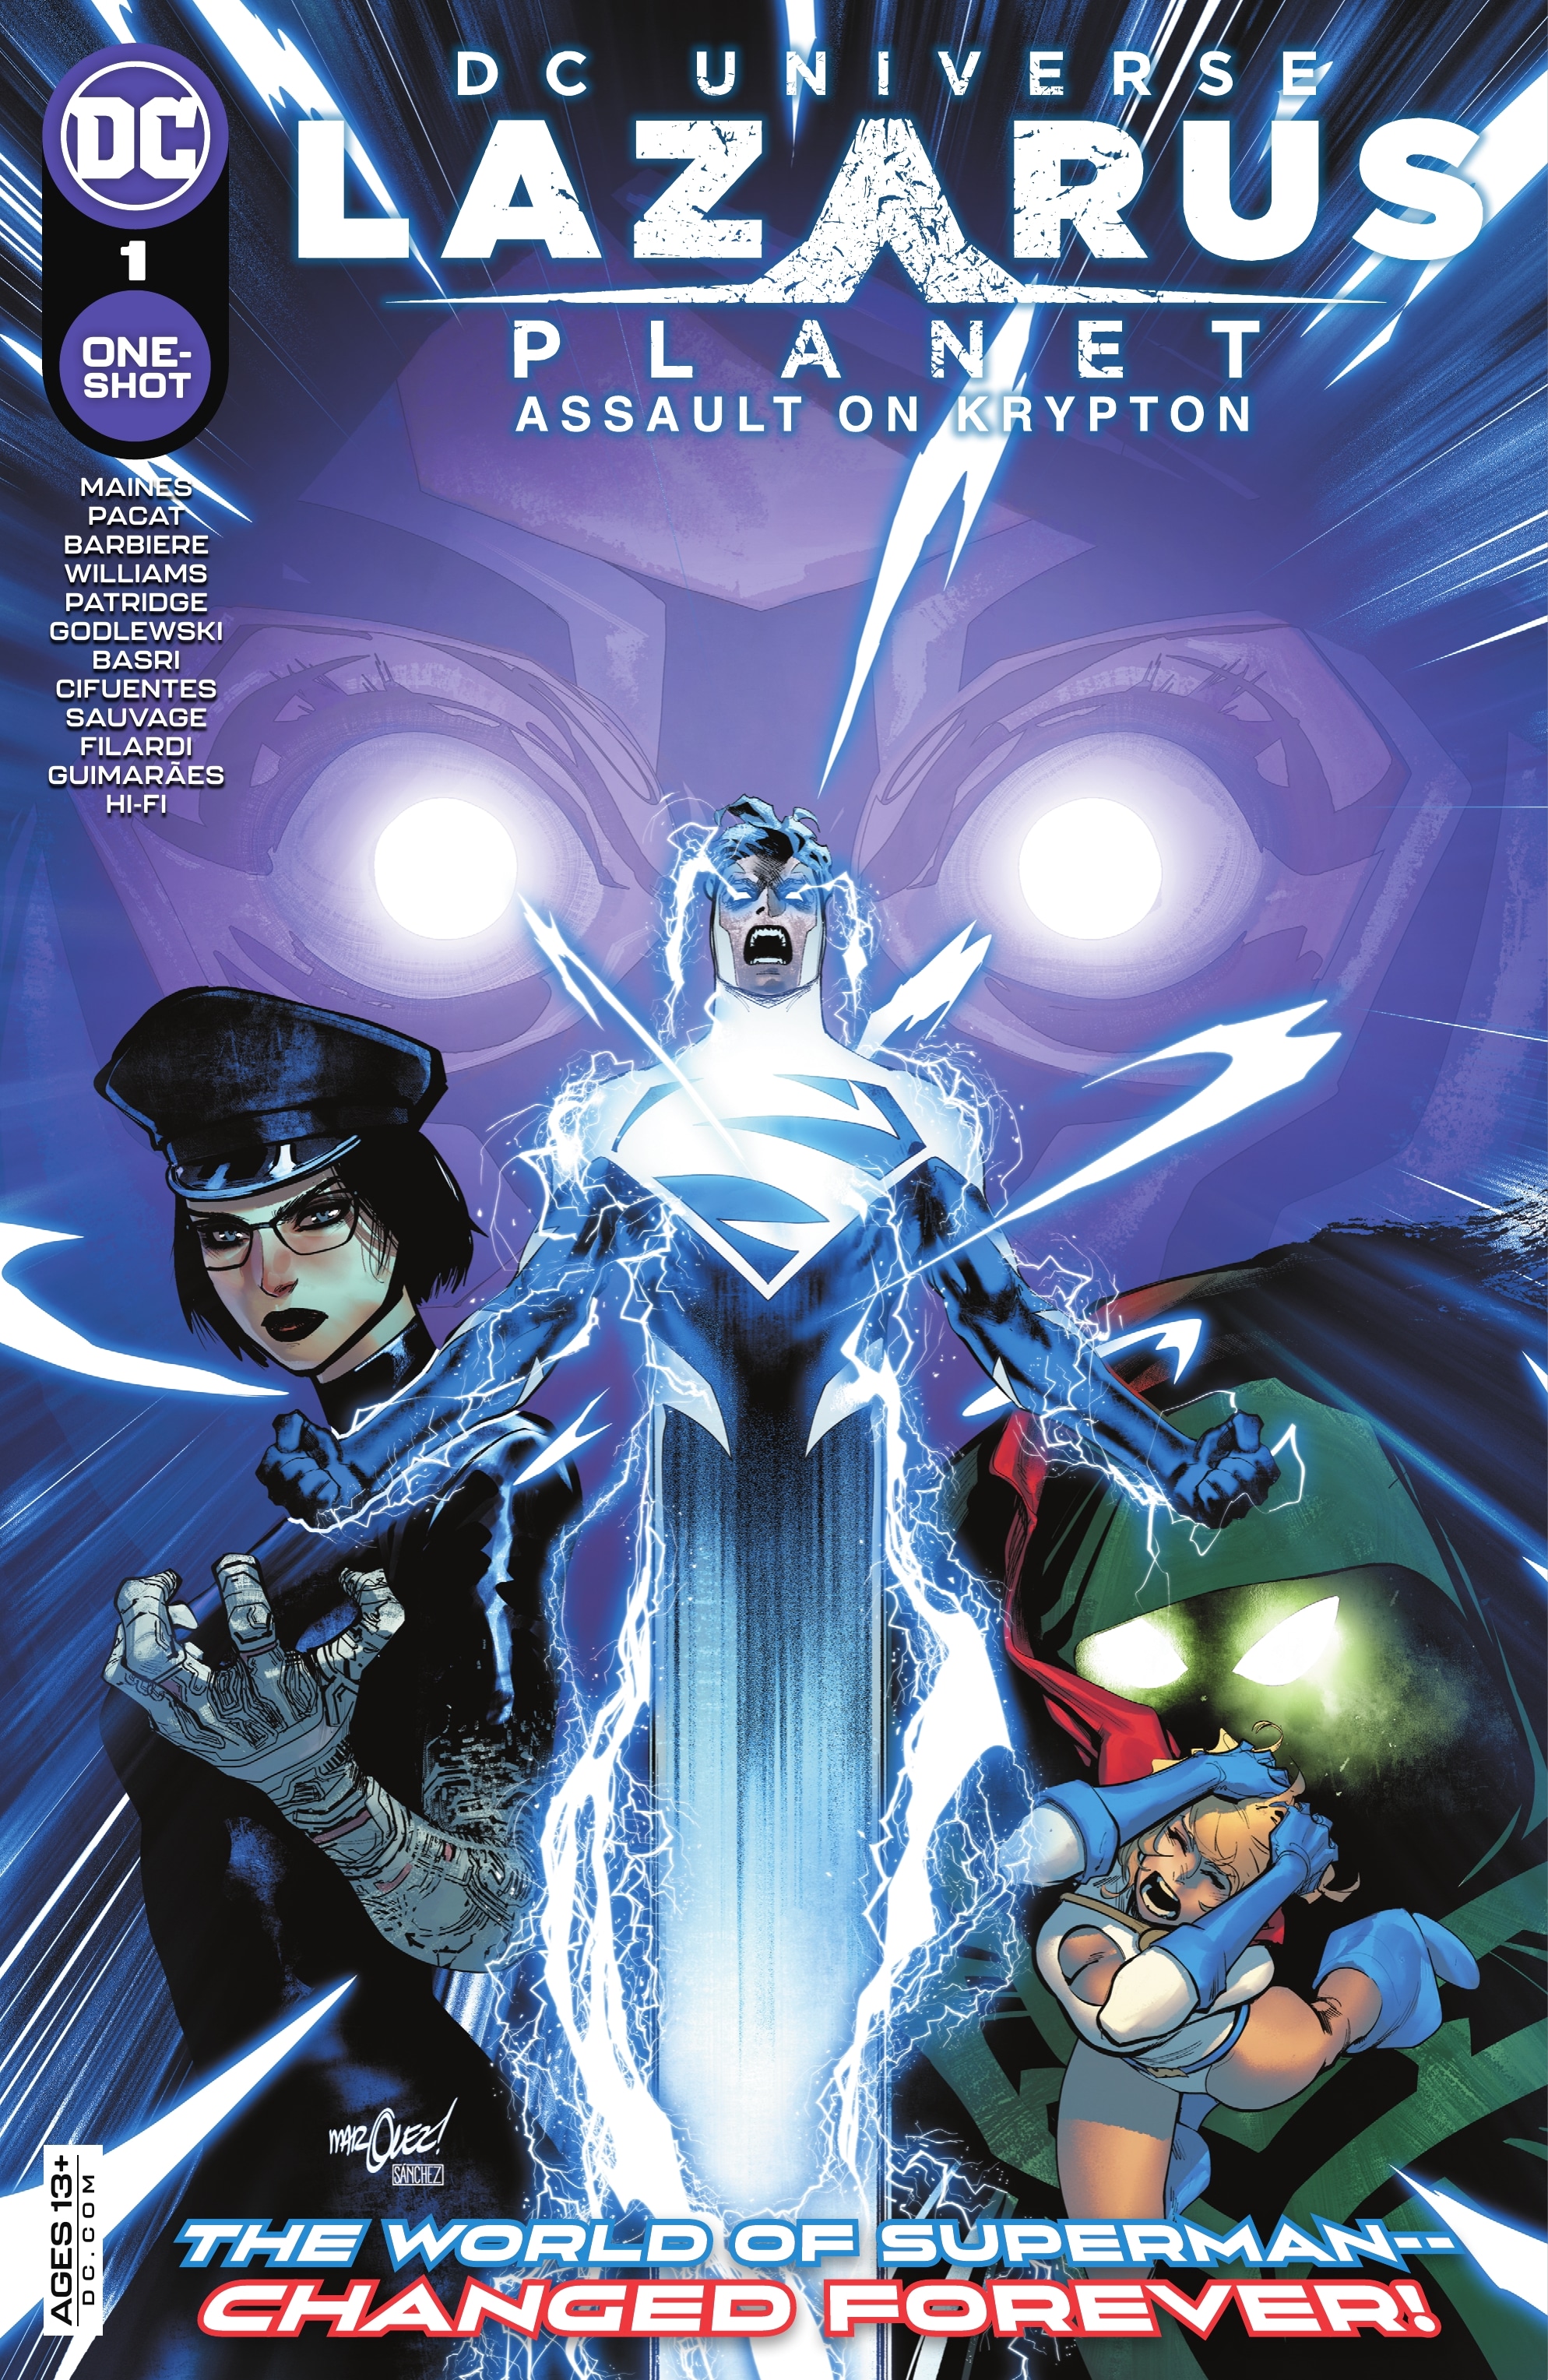 Read online Lazarus Planet: Assault on Krypton comic -  Issue # Full - 1